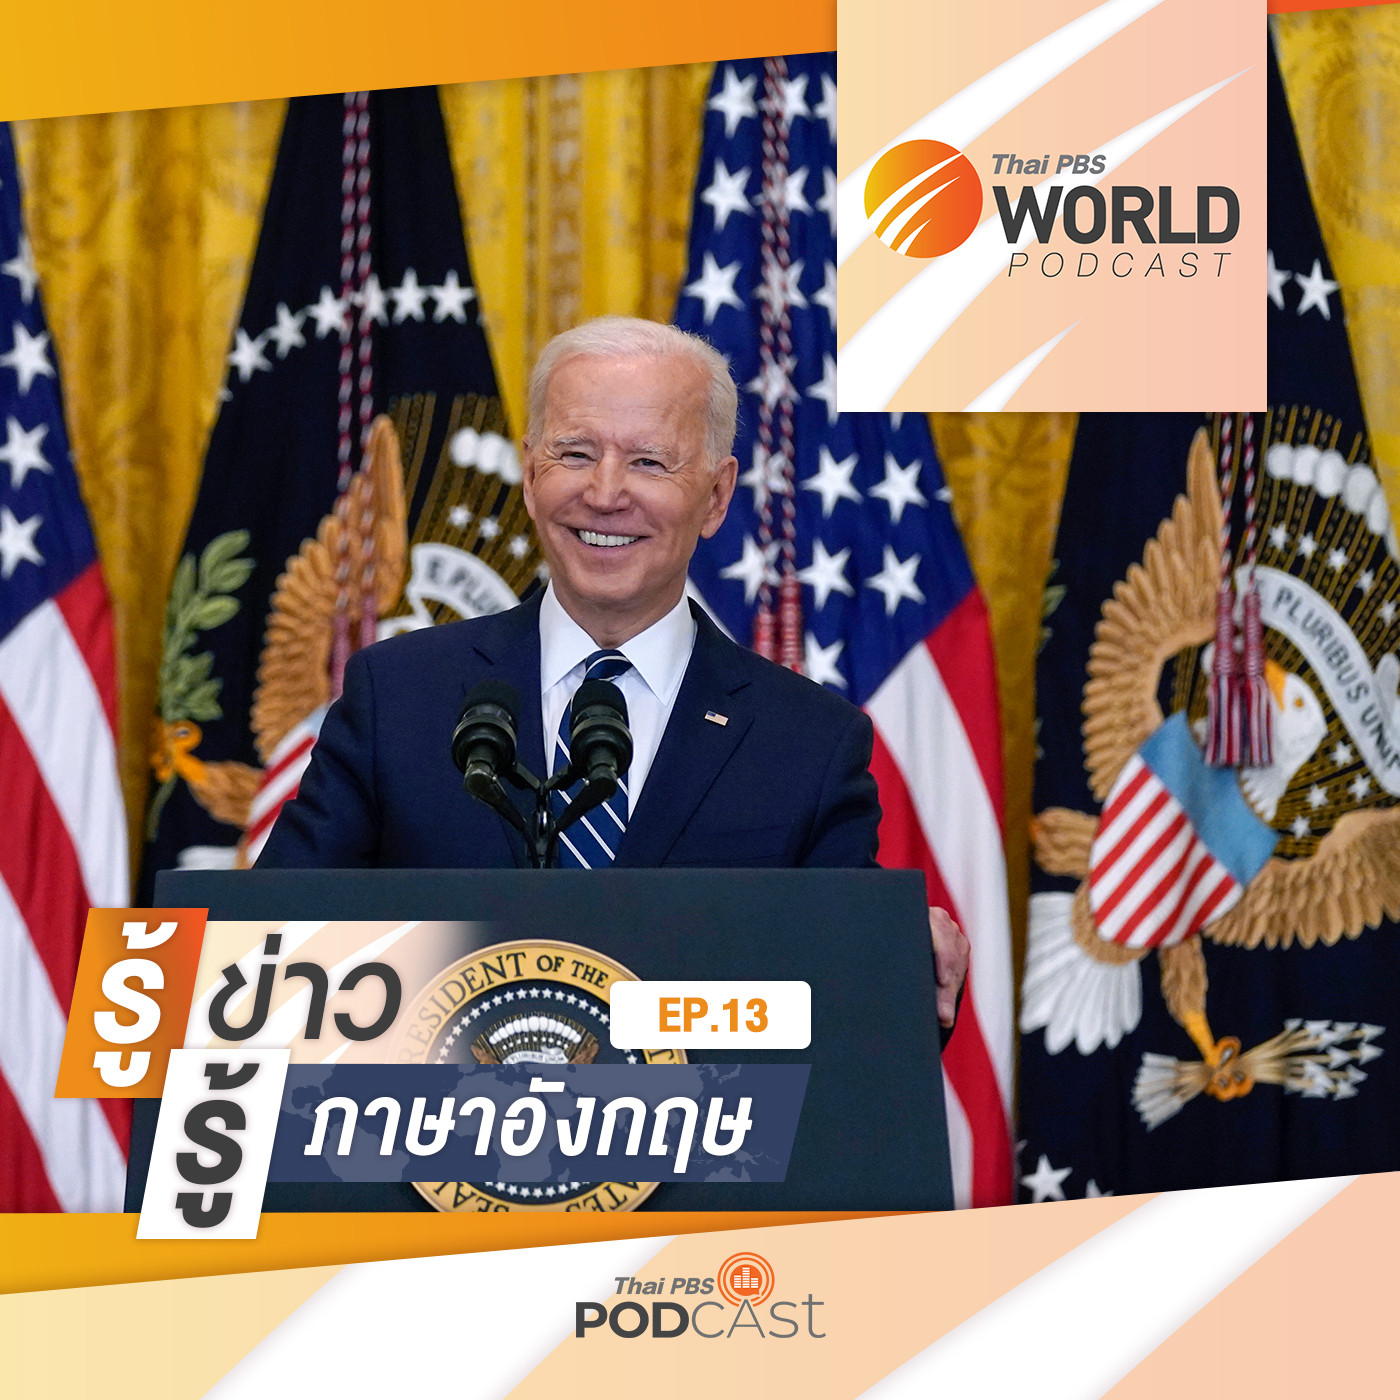 Thai PBS World Podcast - รู้ข่าว รู้ภาษาอังกฤษ EP. 13: รู้ข่าว รู้ภาษาอังกฤษ - "โจ ไบเดน" แถลงข่าวครั้งแรกในฐานะประธานาธิบดีสหรัฐฯ